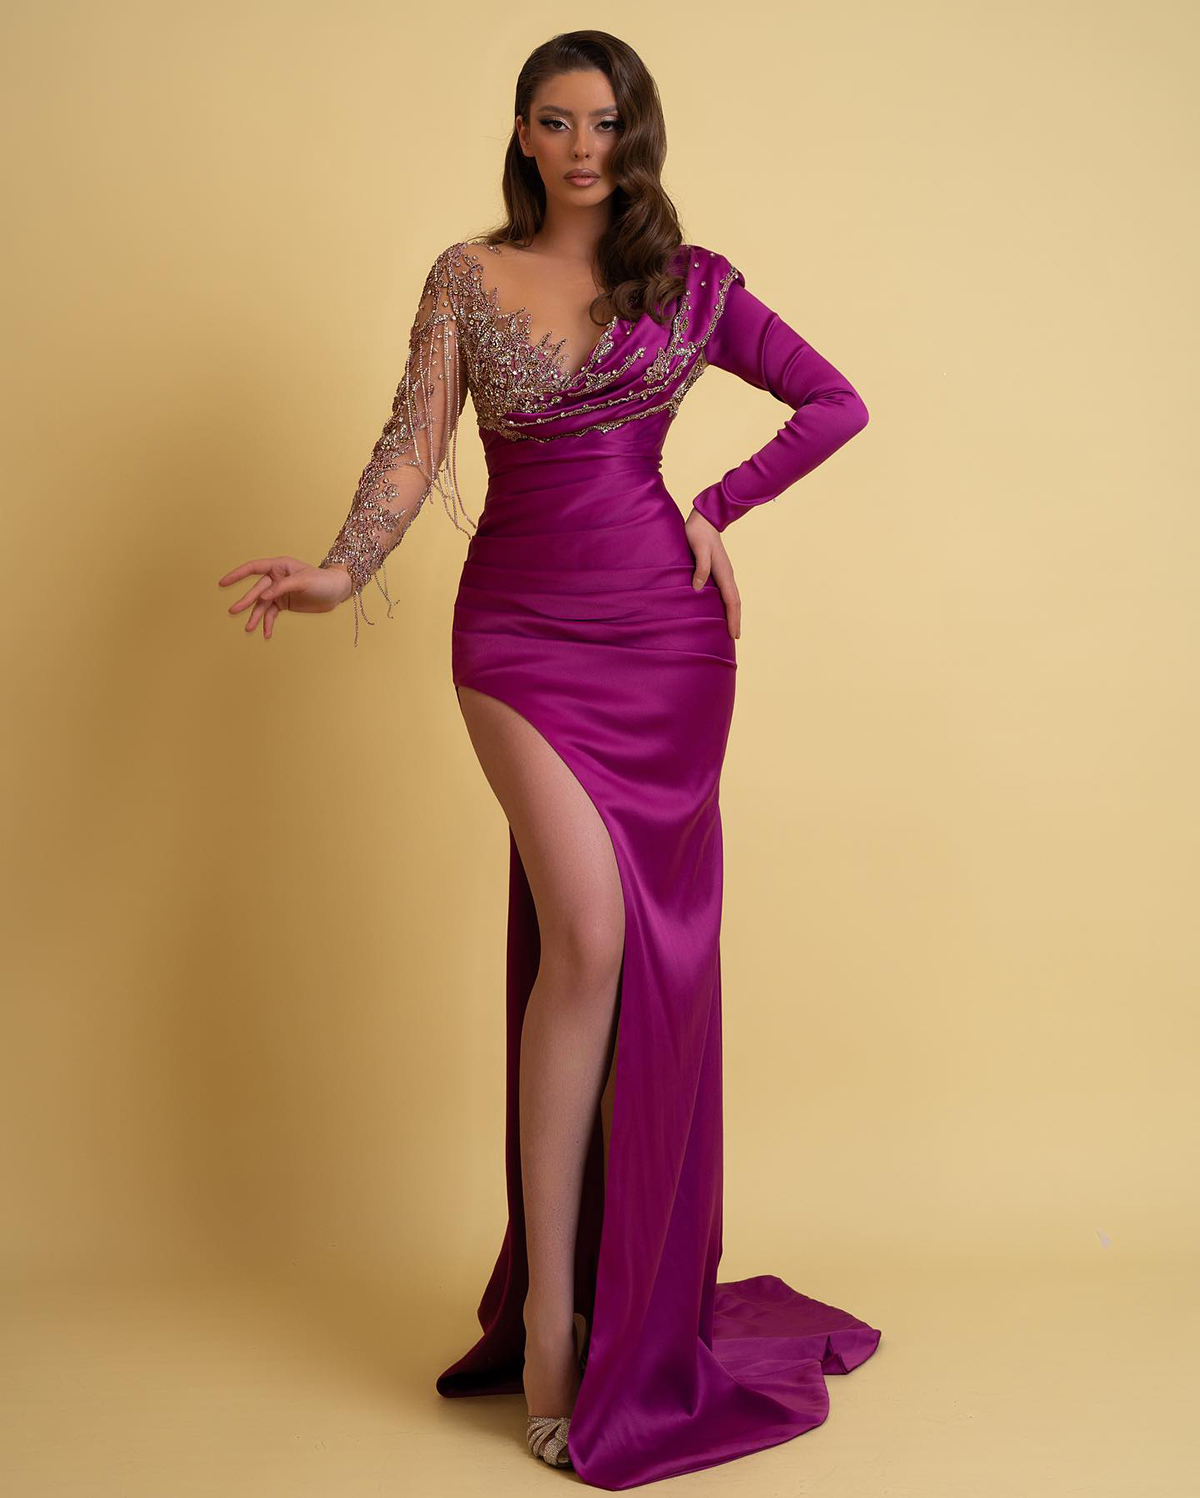 Classic Mermaid Evening Dresses Crystal Tassel Prom Gowns Side Split Long Sleeve Sheer Neck Custom Made Formal Party Dresses